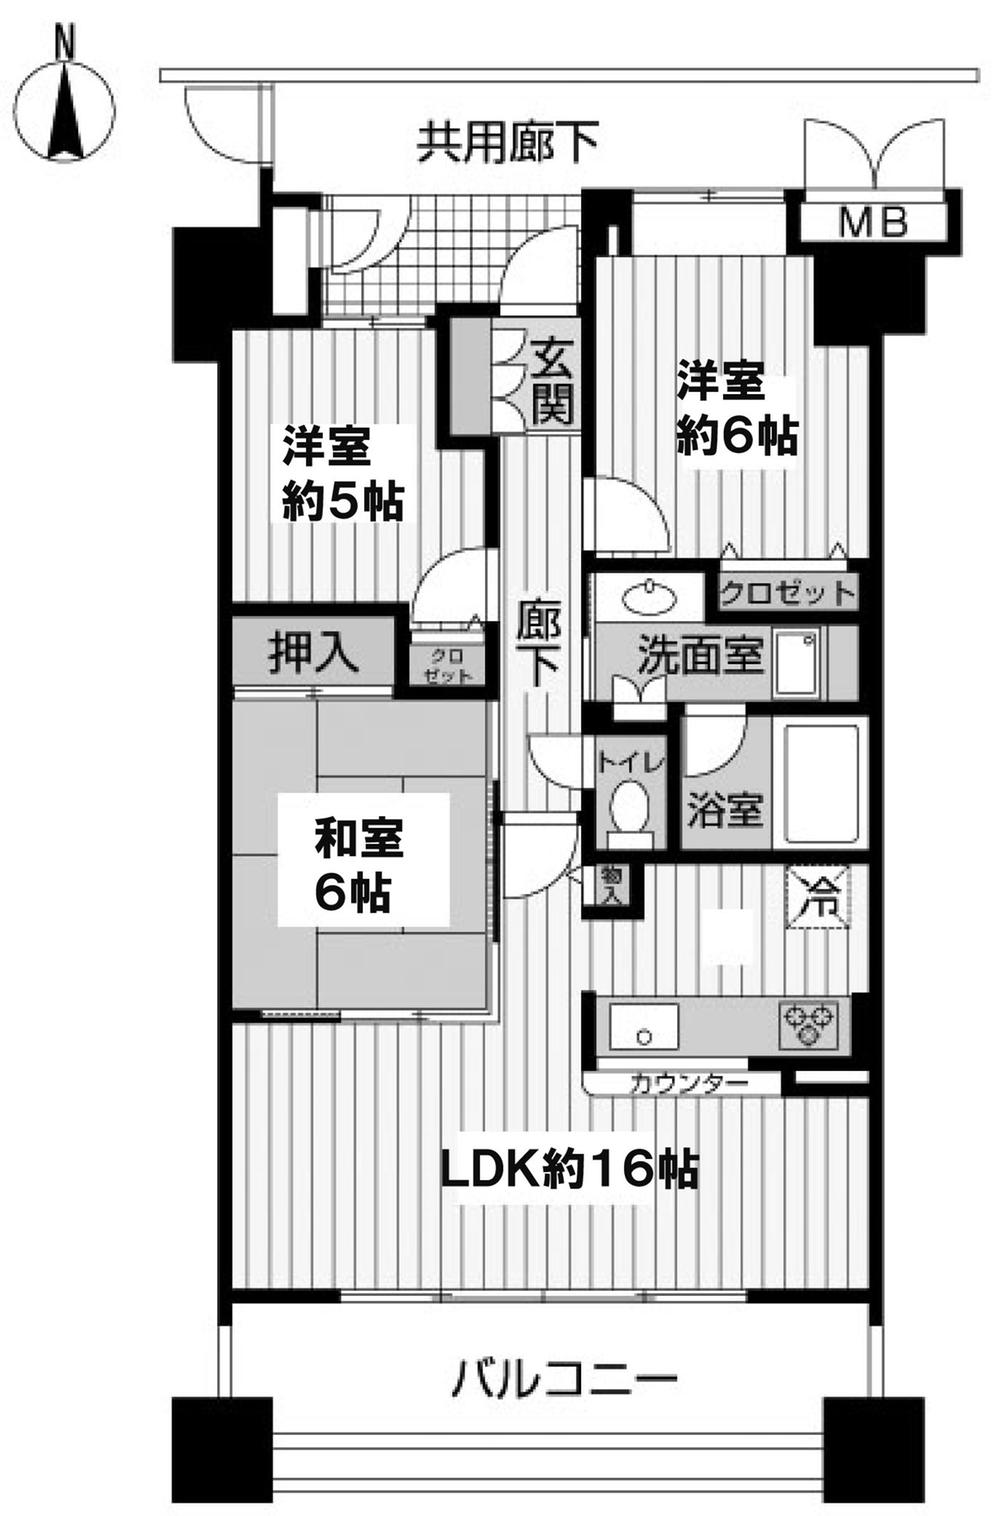 Floor plan. 3LDK, Price 27 million yen, Occupied area 72.69 sq m , Balcony area 12.73 sq m